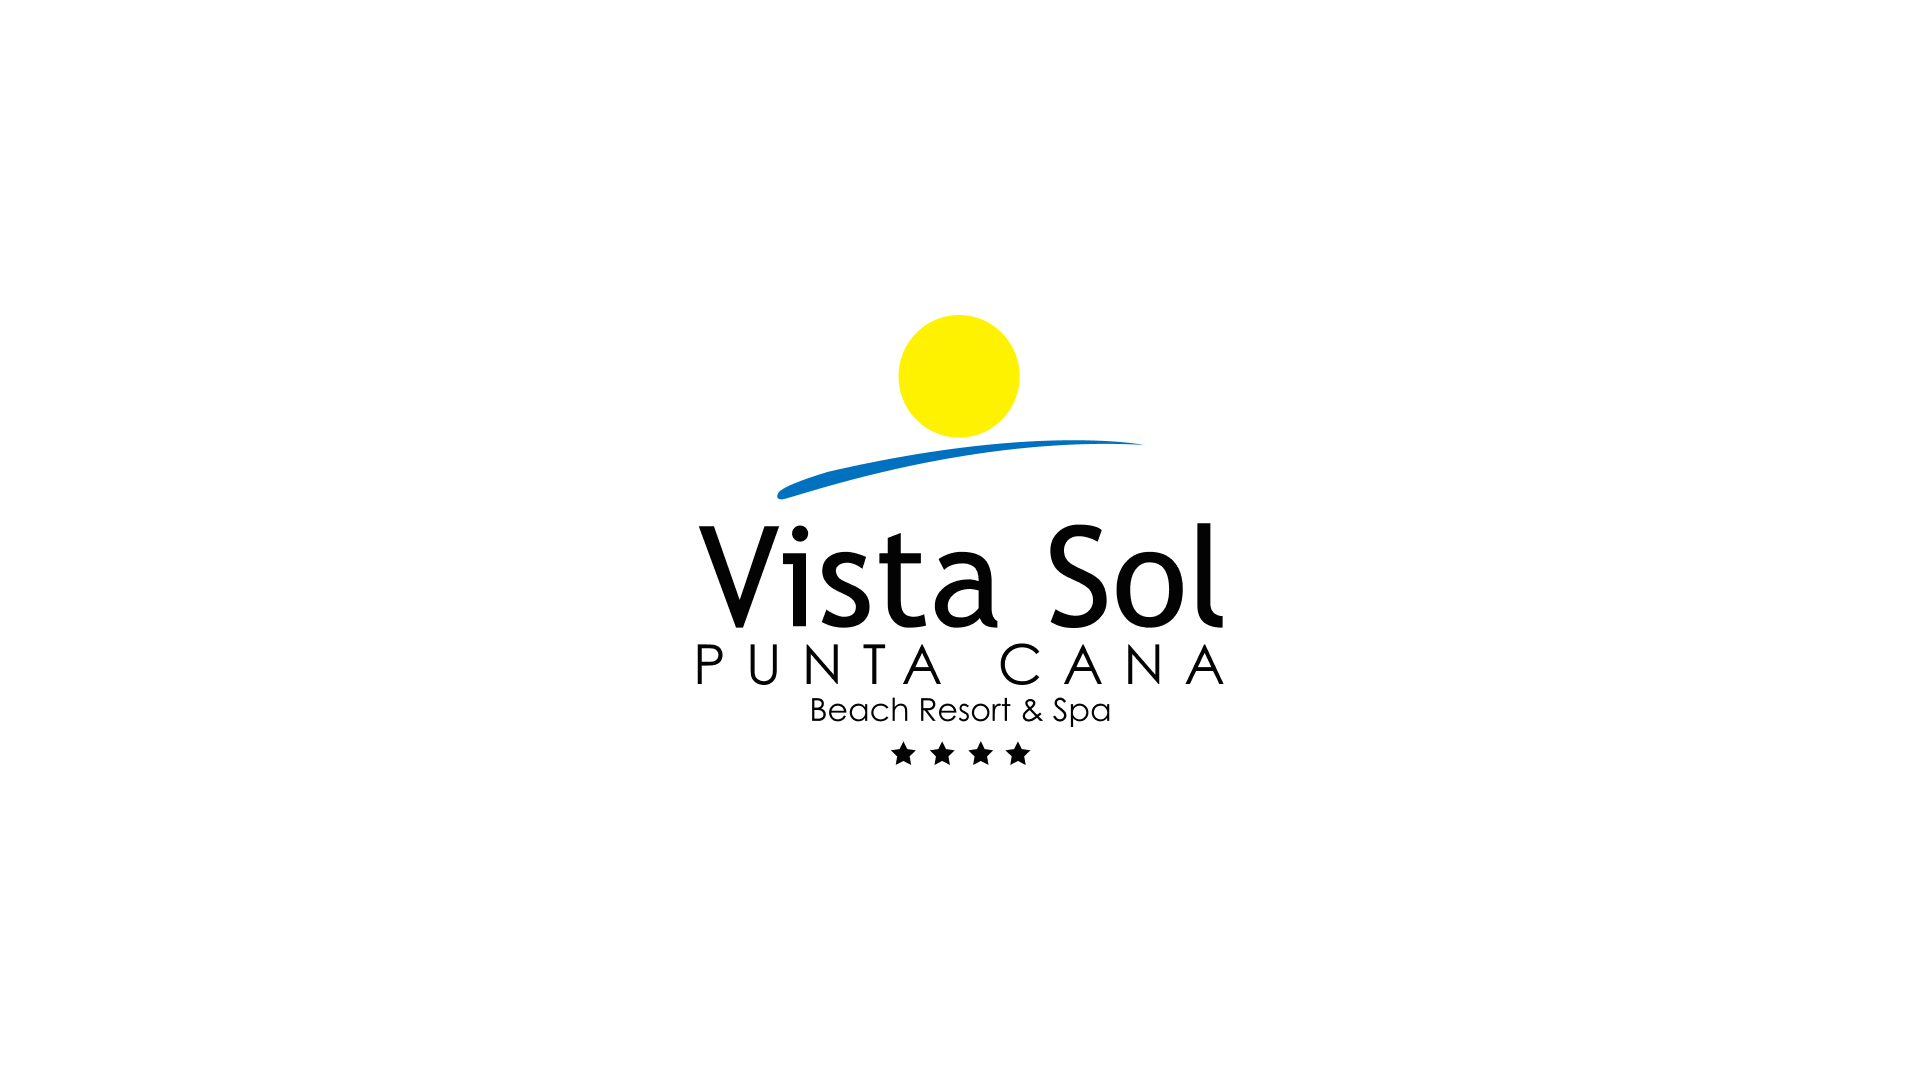 Logotipo do resort Vista Sol